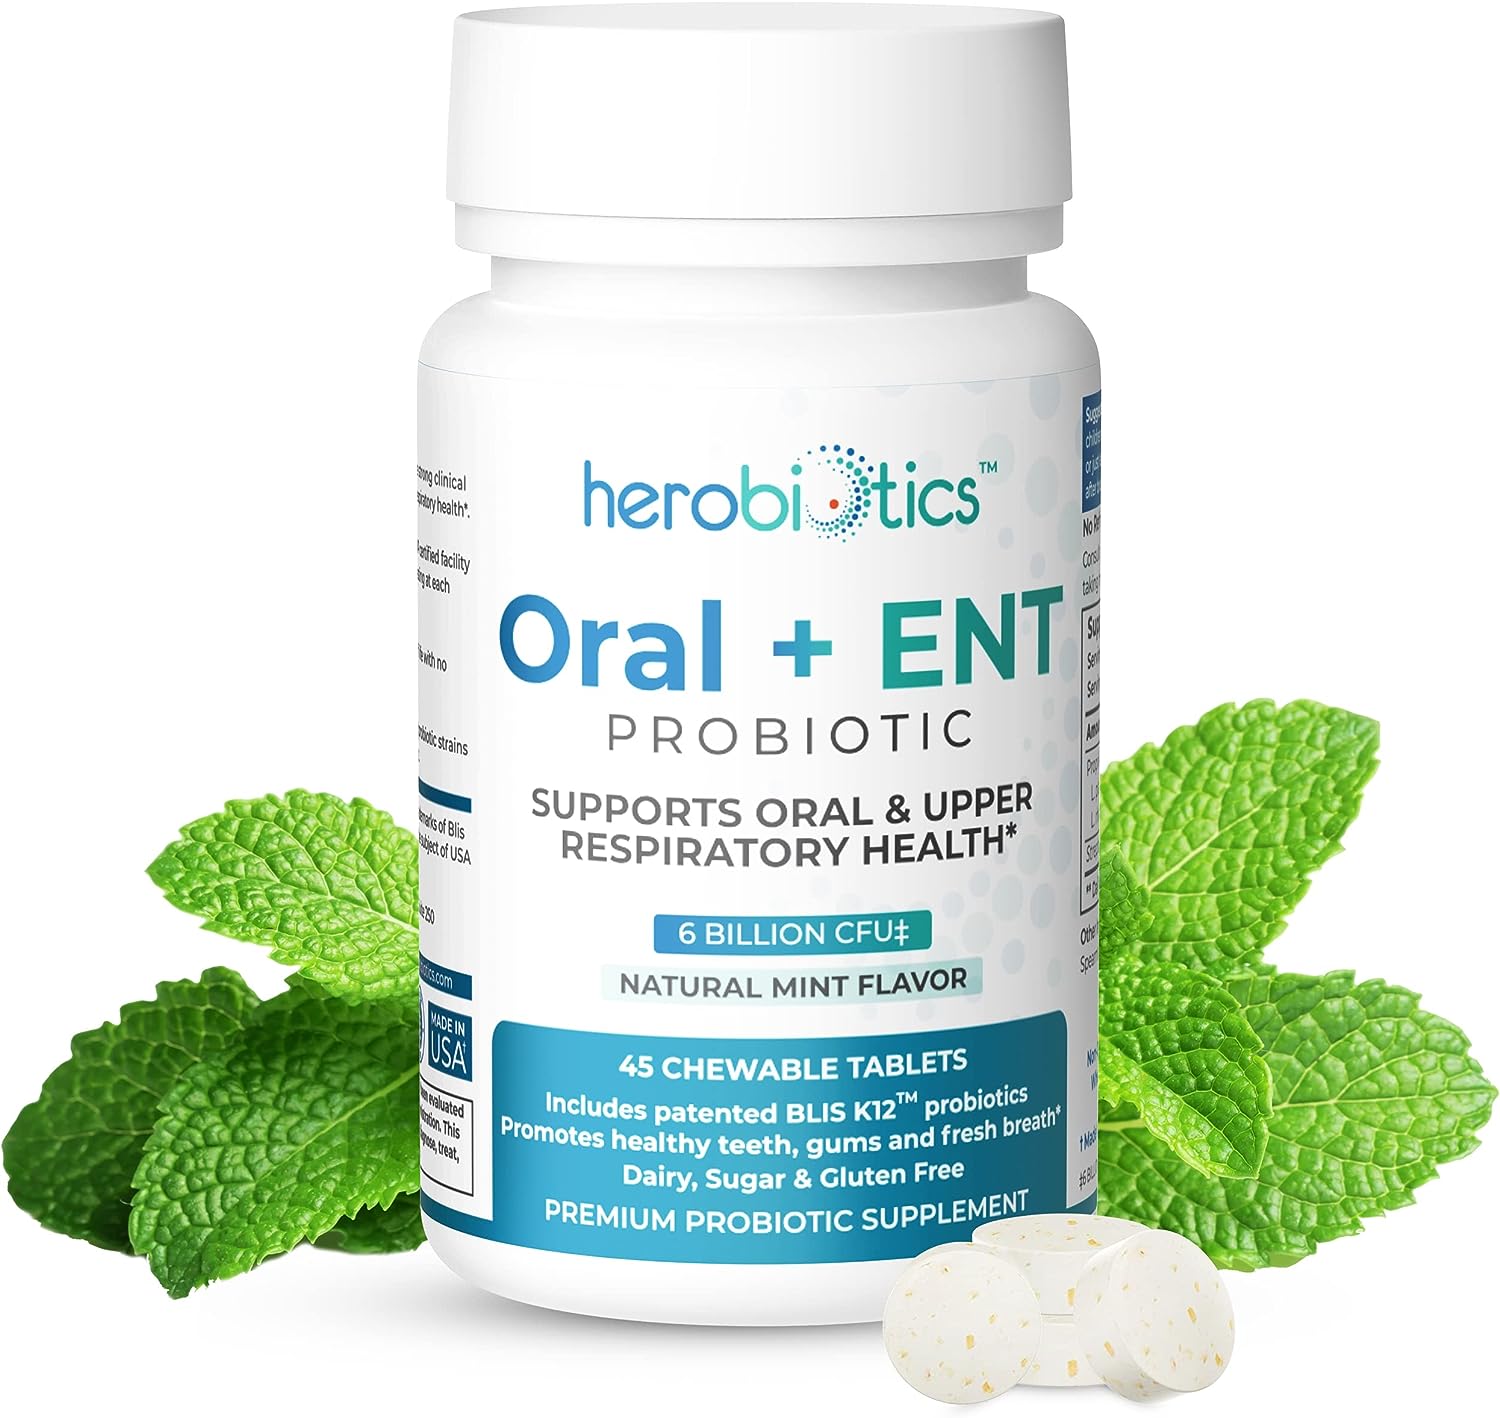 Herobiotics Oral + ENT Probiotic